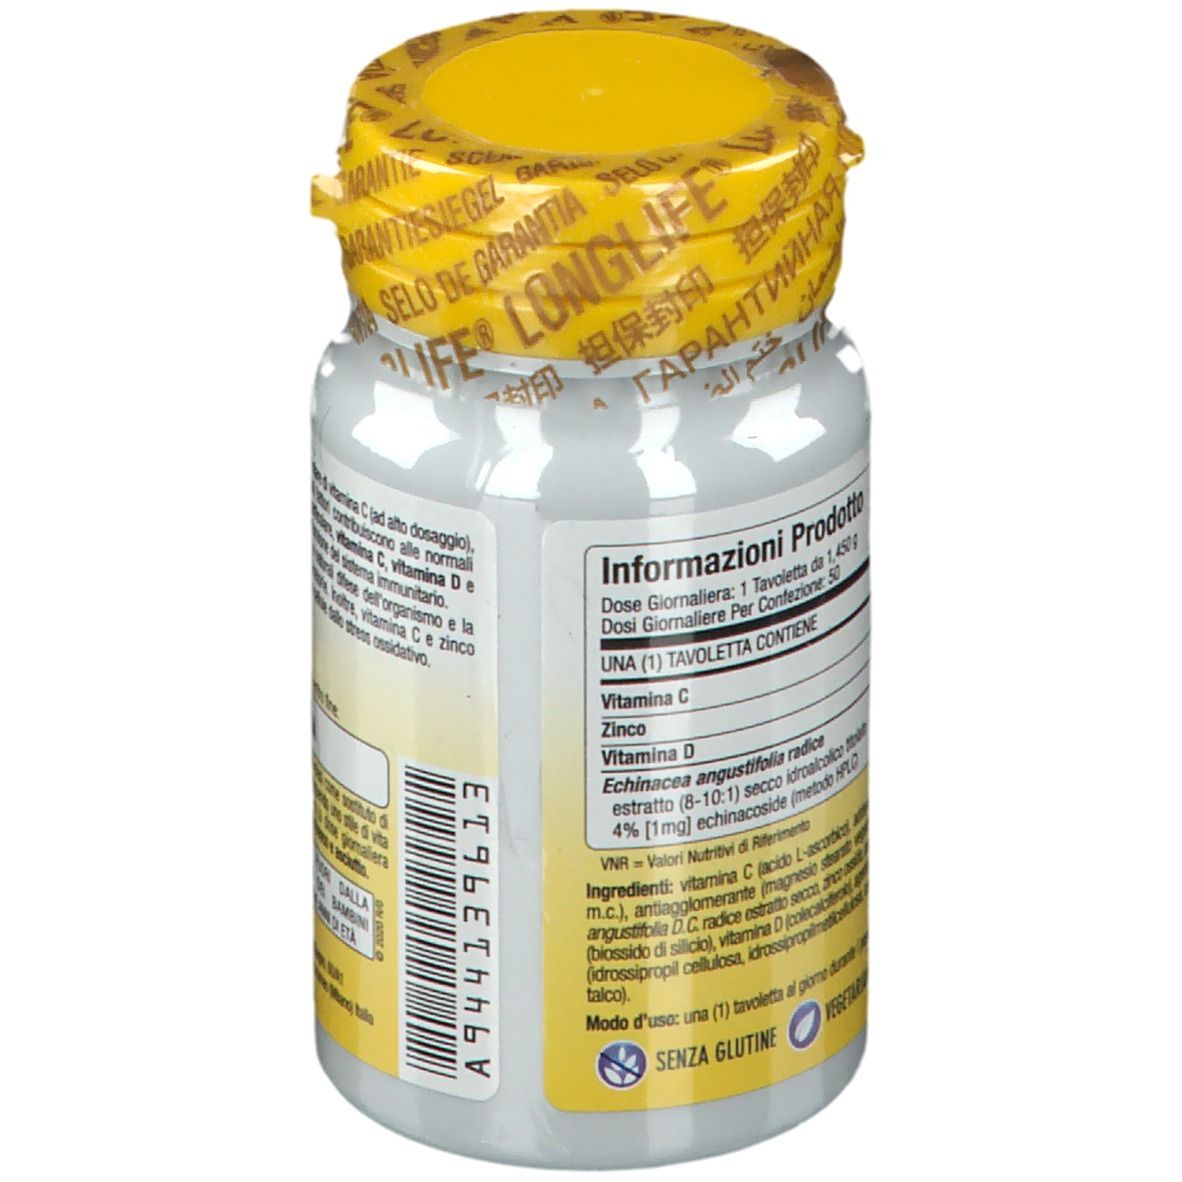 LongLife® C 1000 Forte 1000 mg